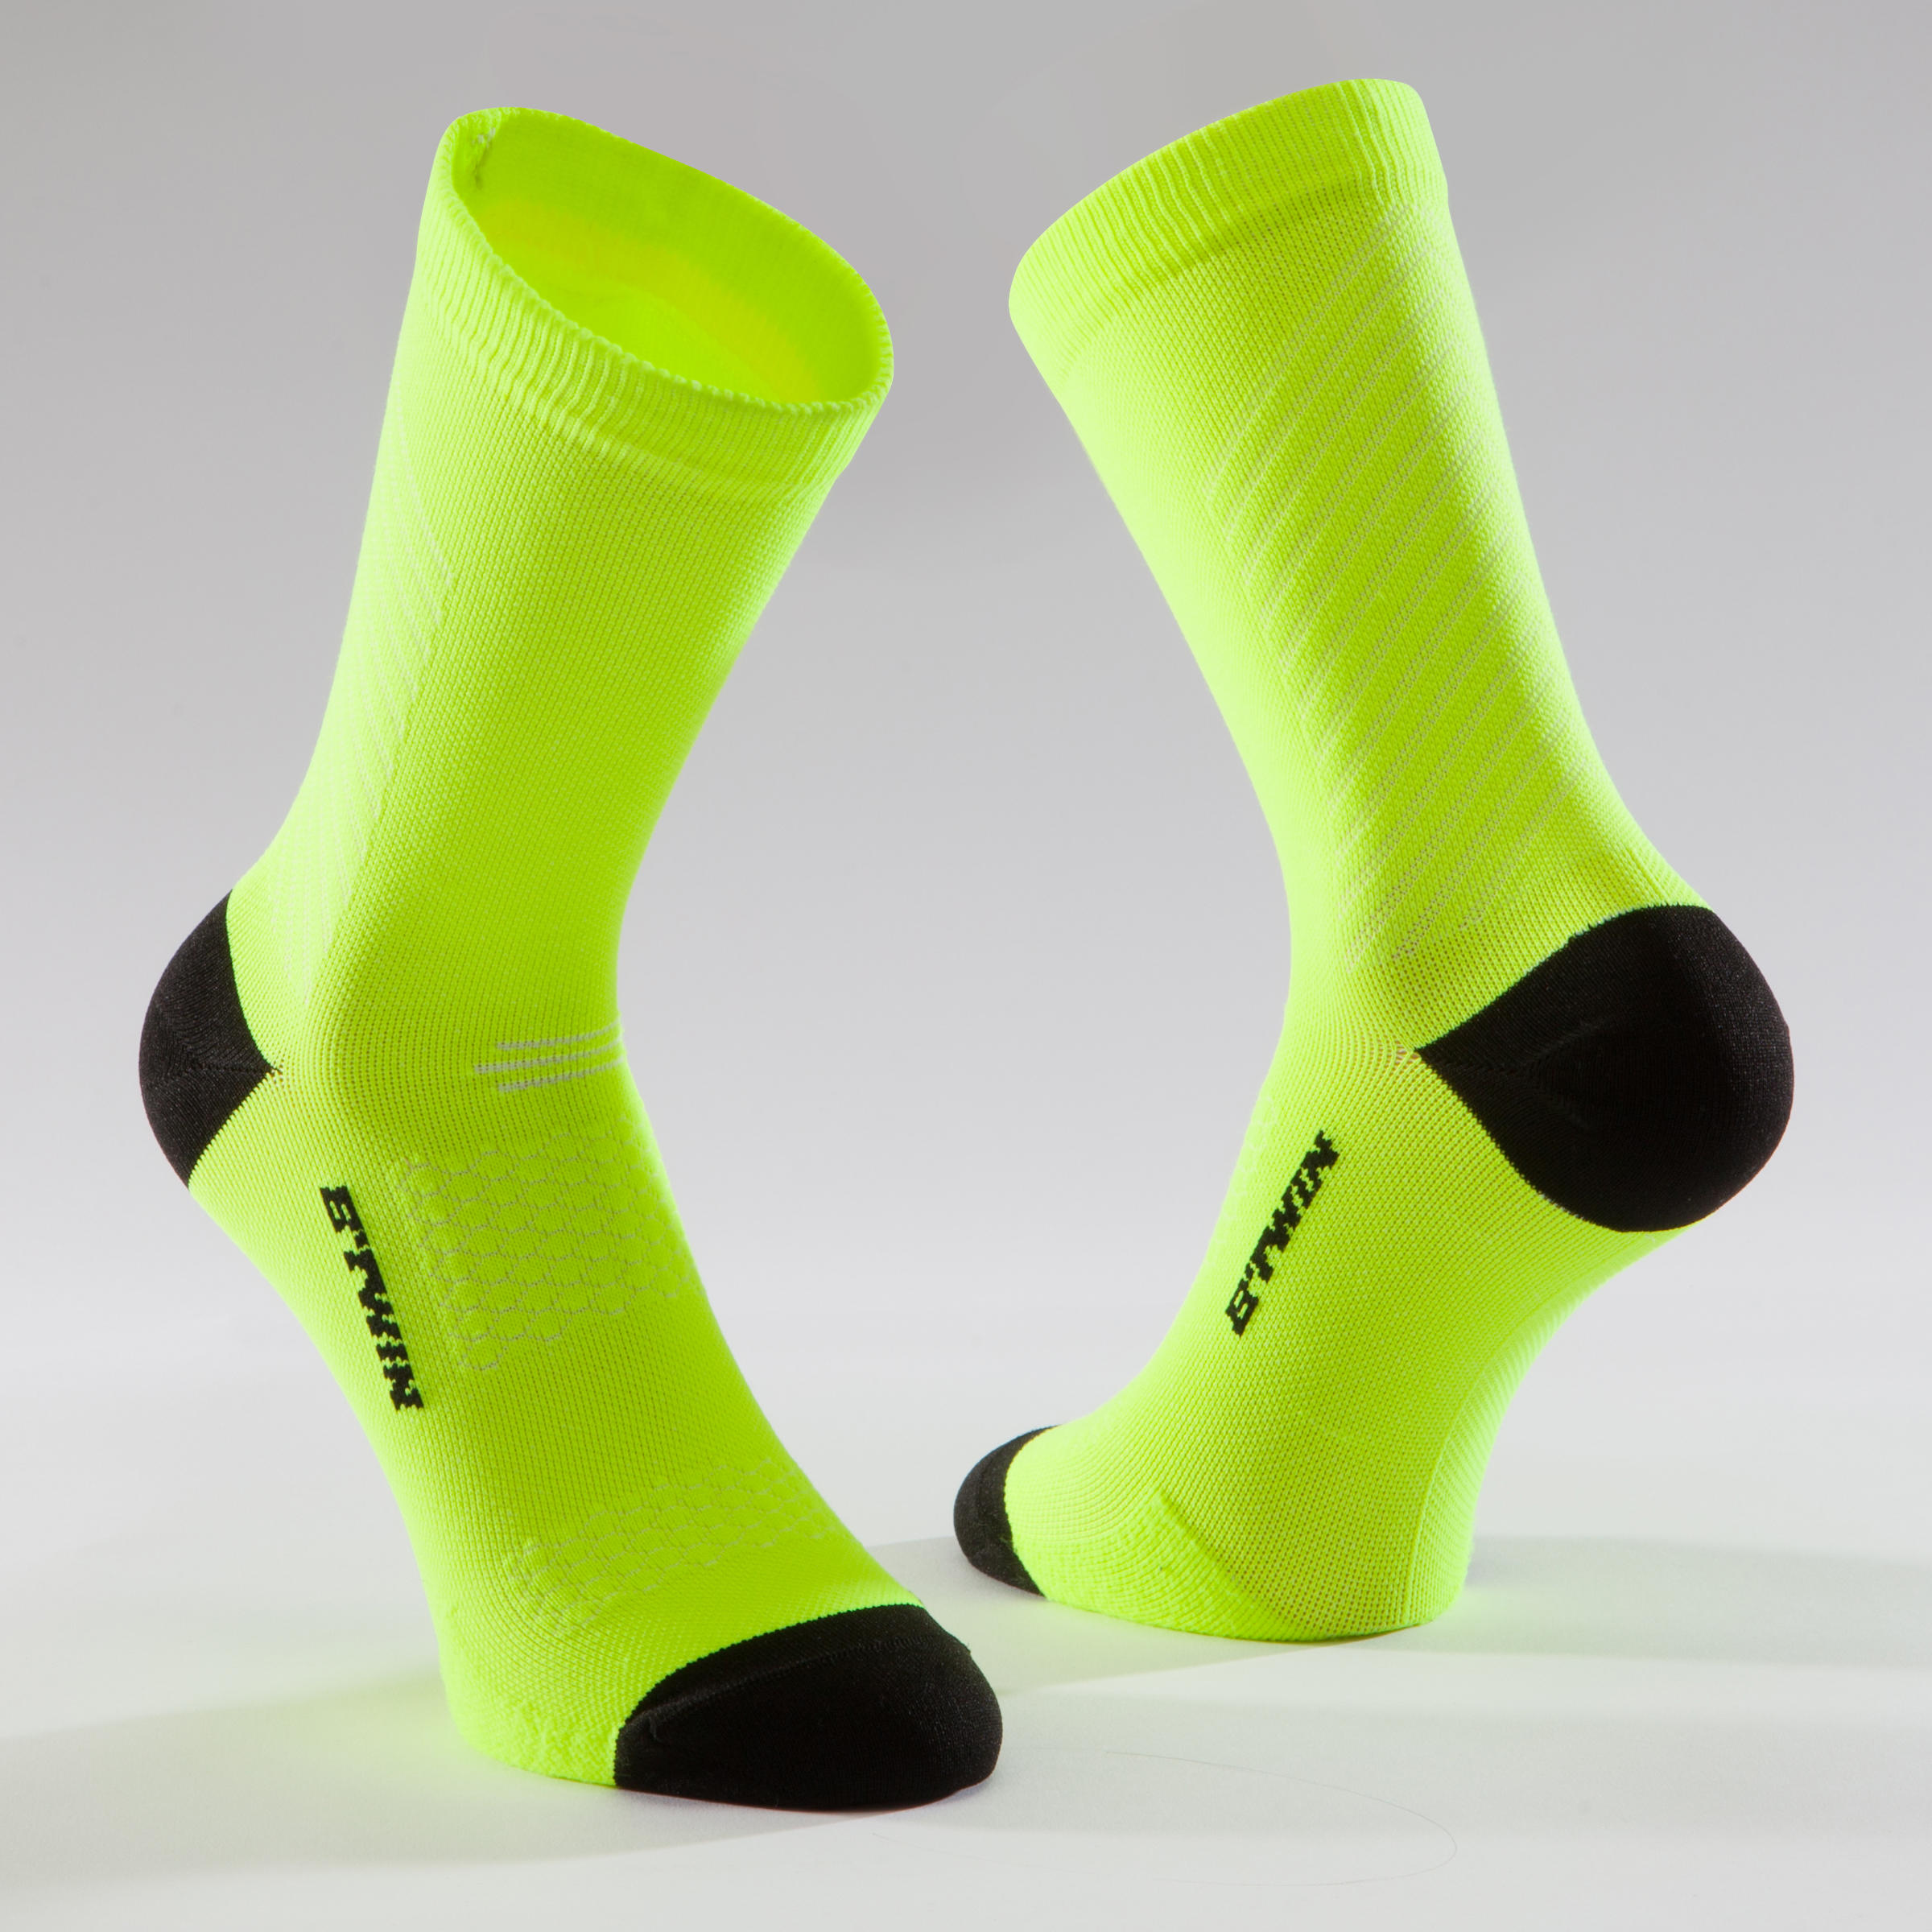 900 Road Cycling Socks - Neon Yellow/Black 2/7